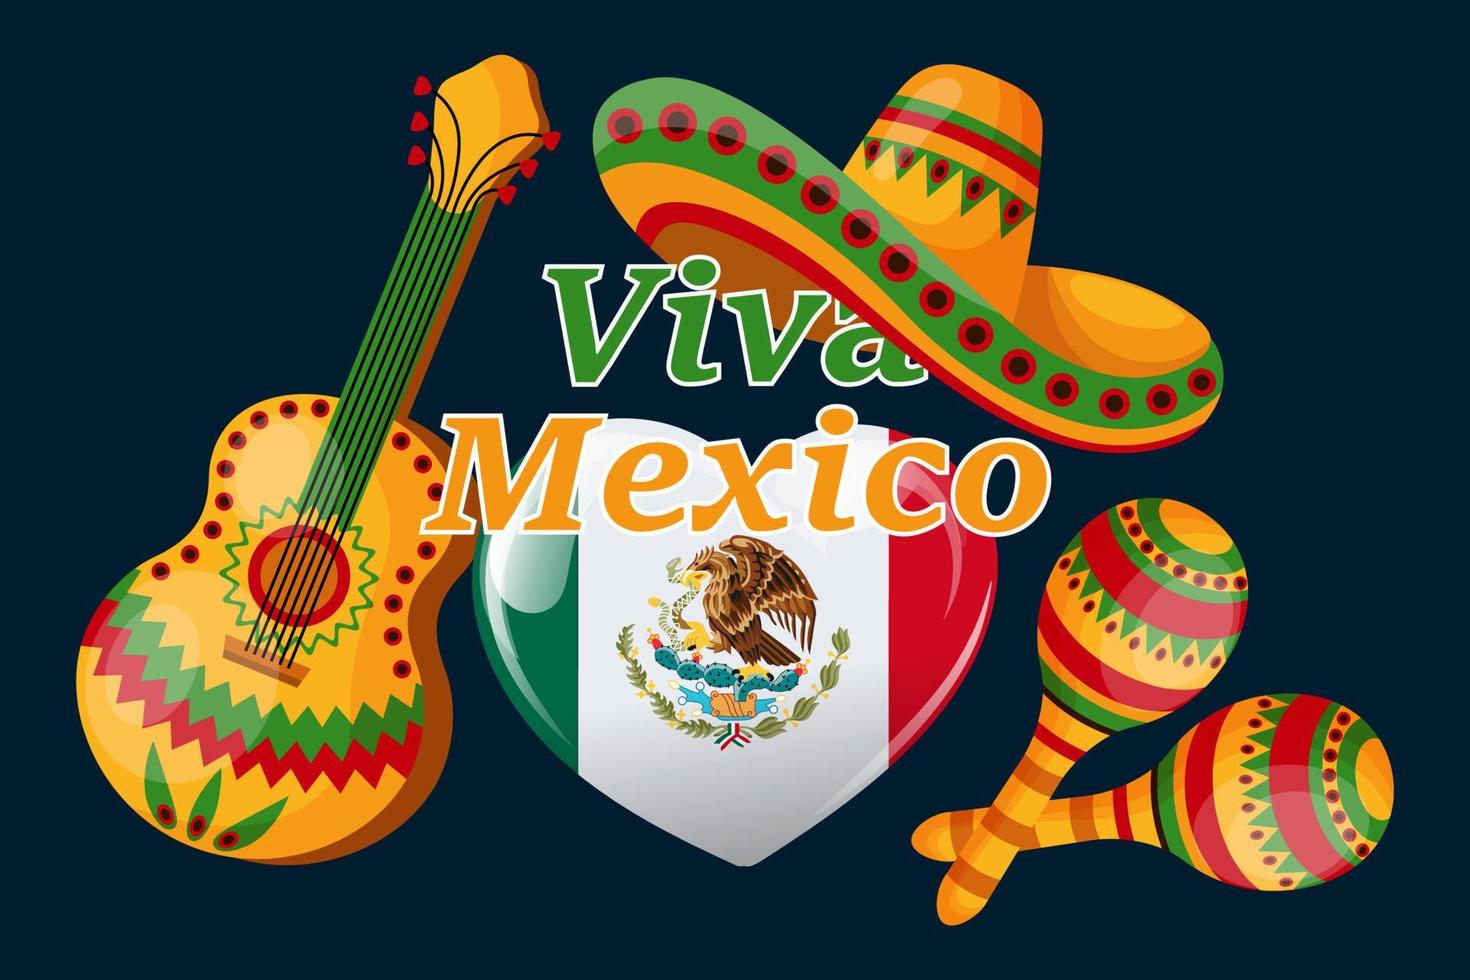 Viva mexico banner, heart shaped mexico flag, maracas, sombrero and guitar on dark background. Poster, vector